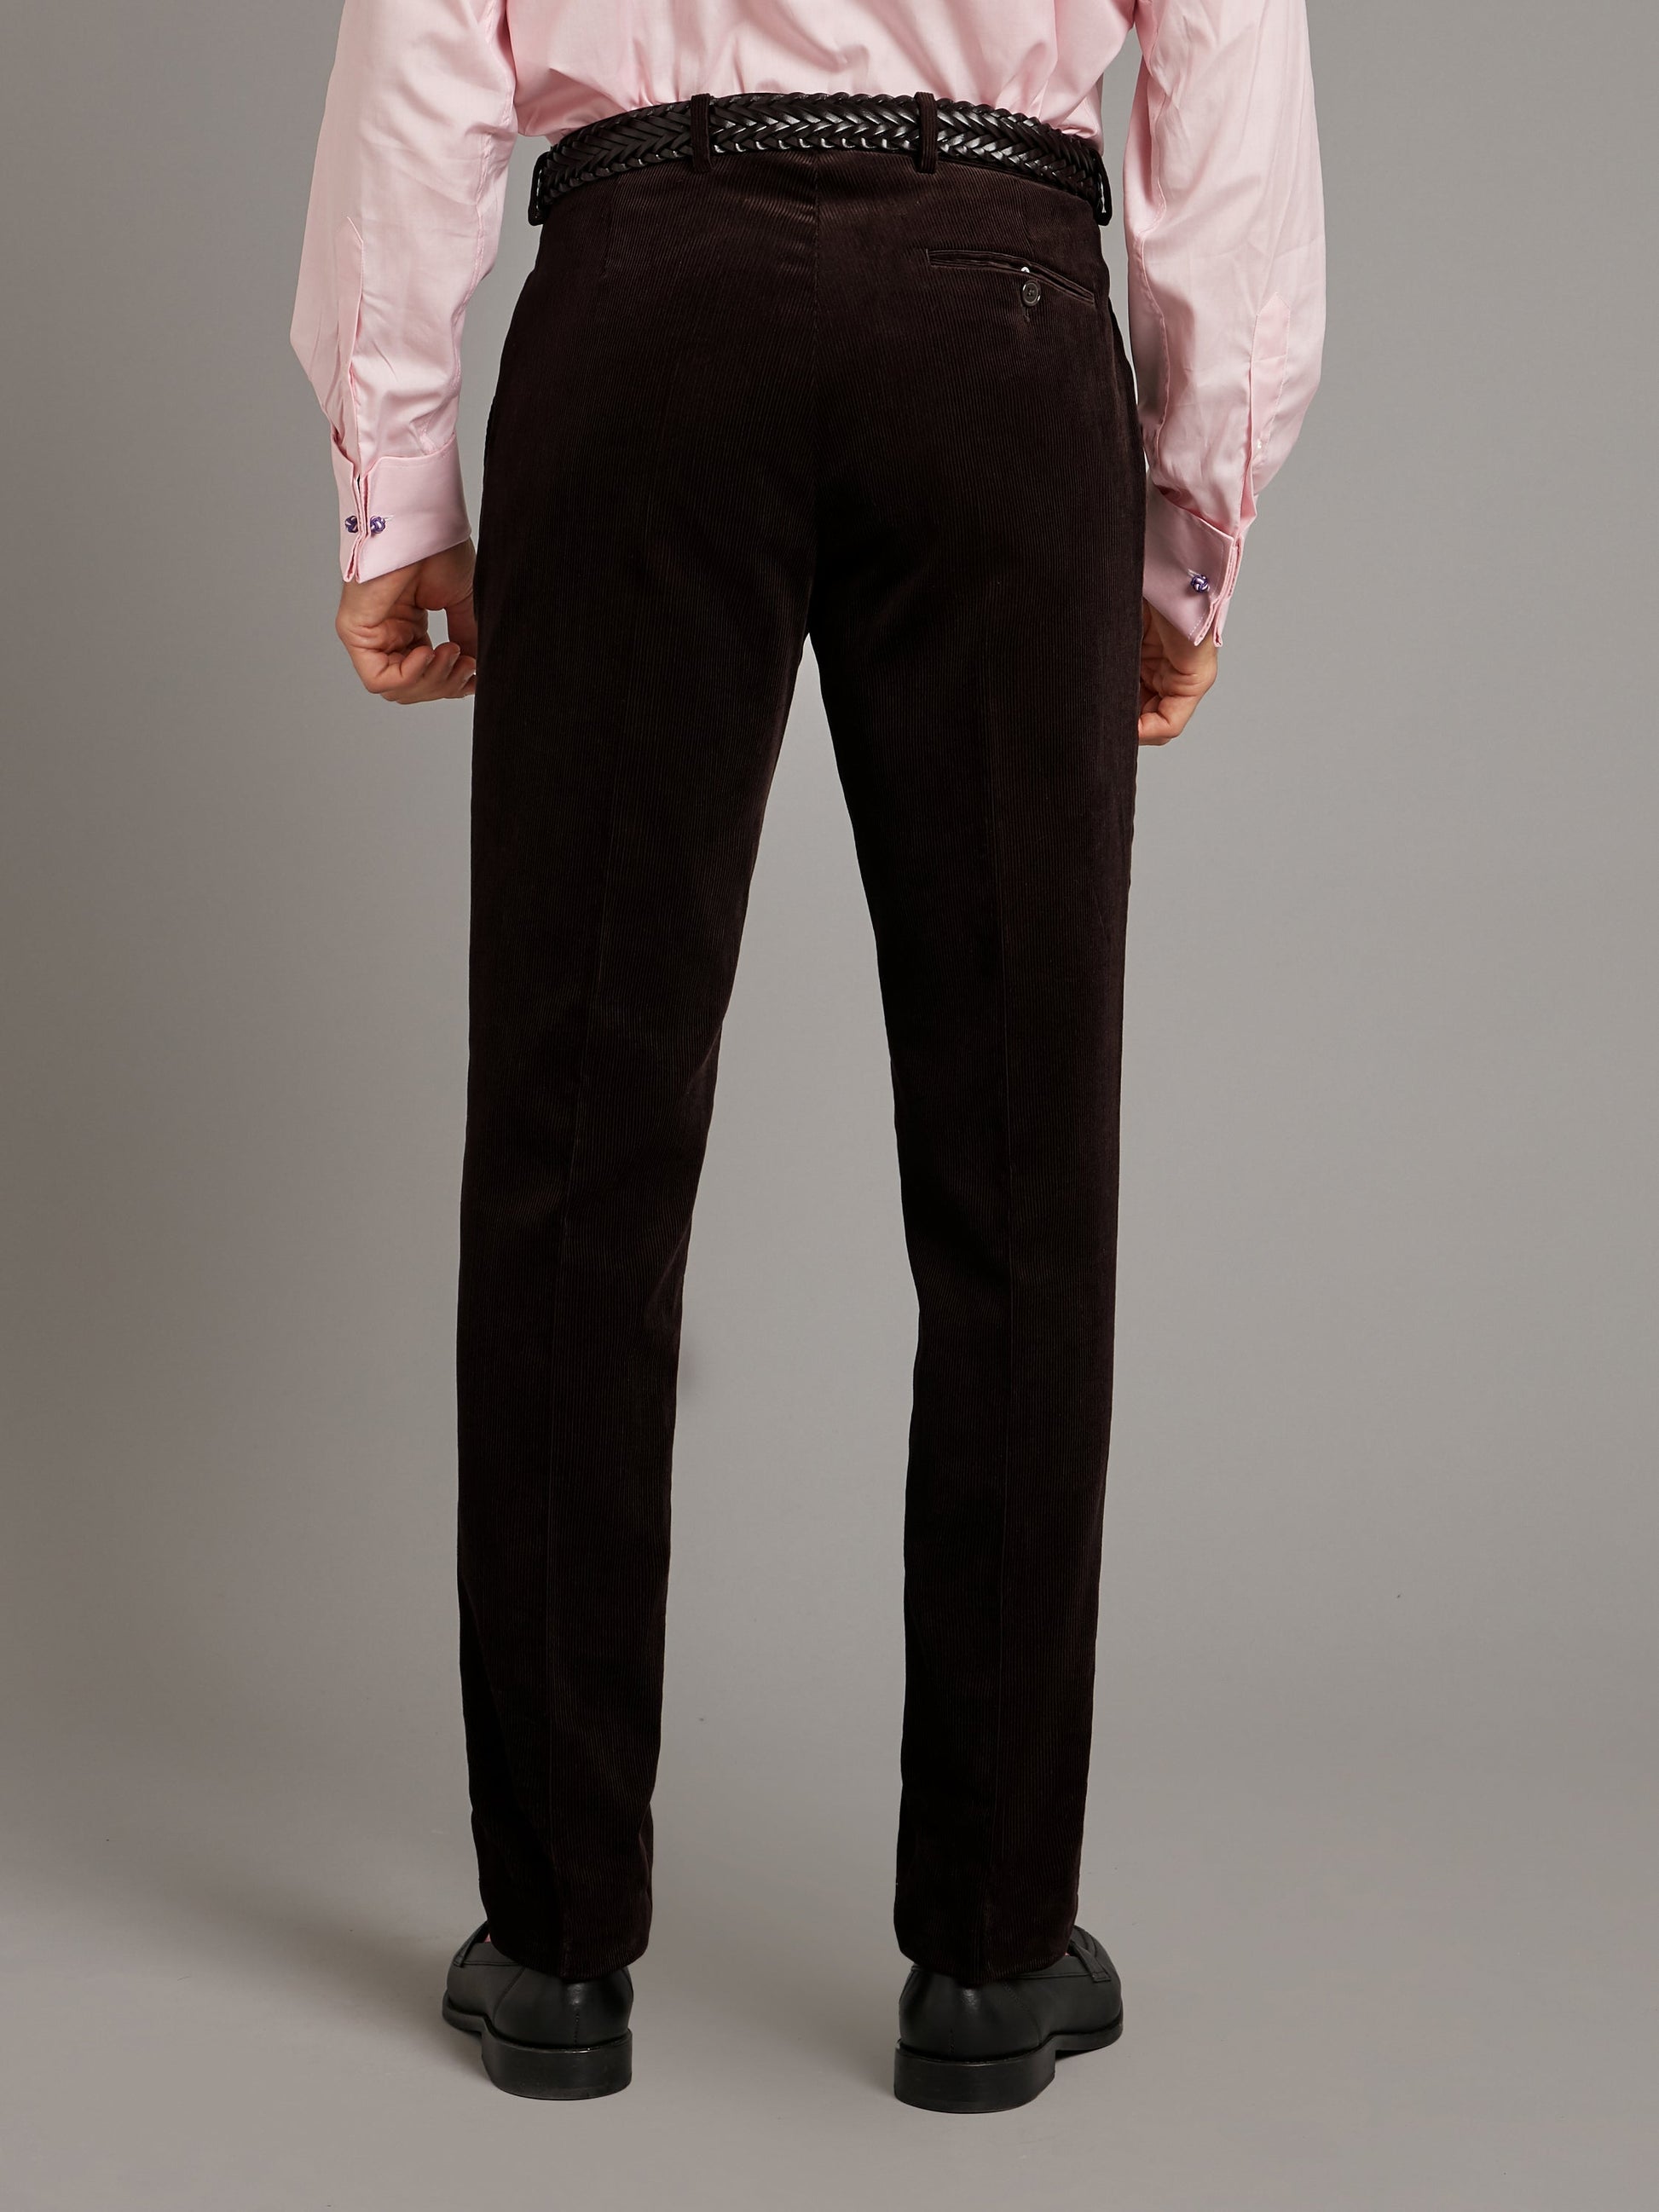 needlecord trousers dark brown 2